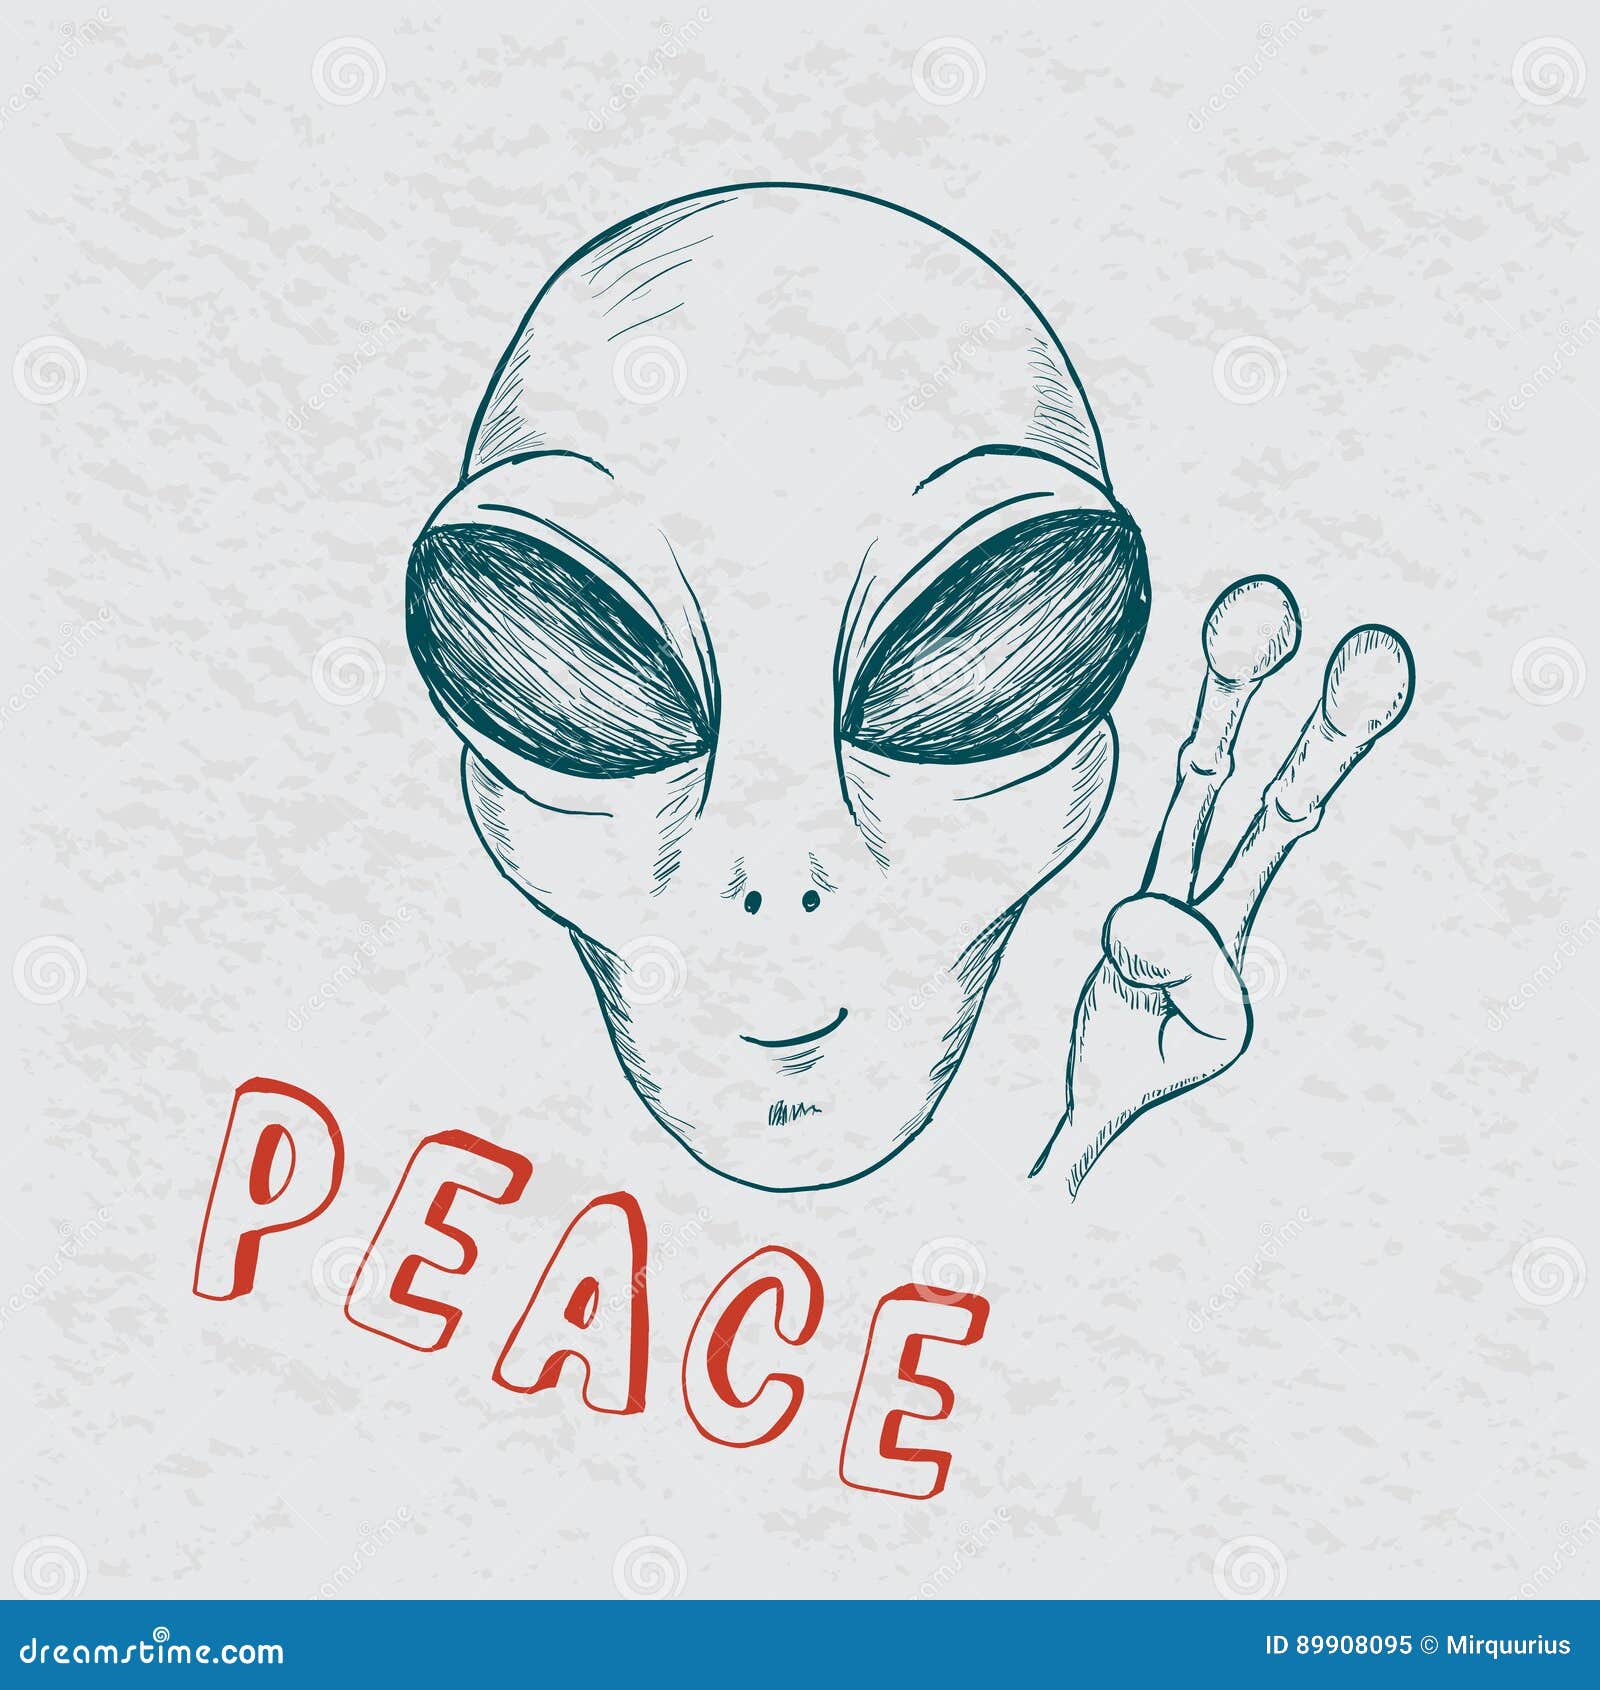 Alien Drawing Cartoon Fan art, Alien face, fictional Character, cartoon,  line png